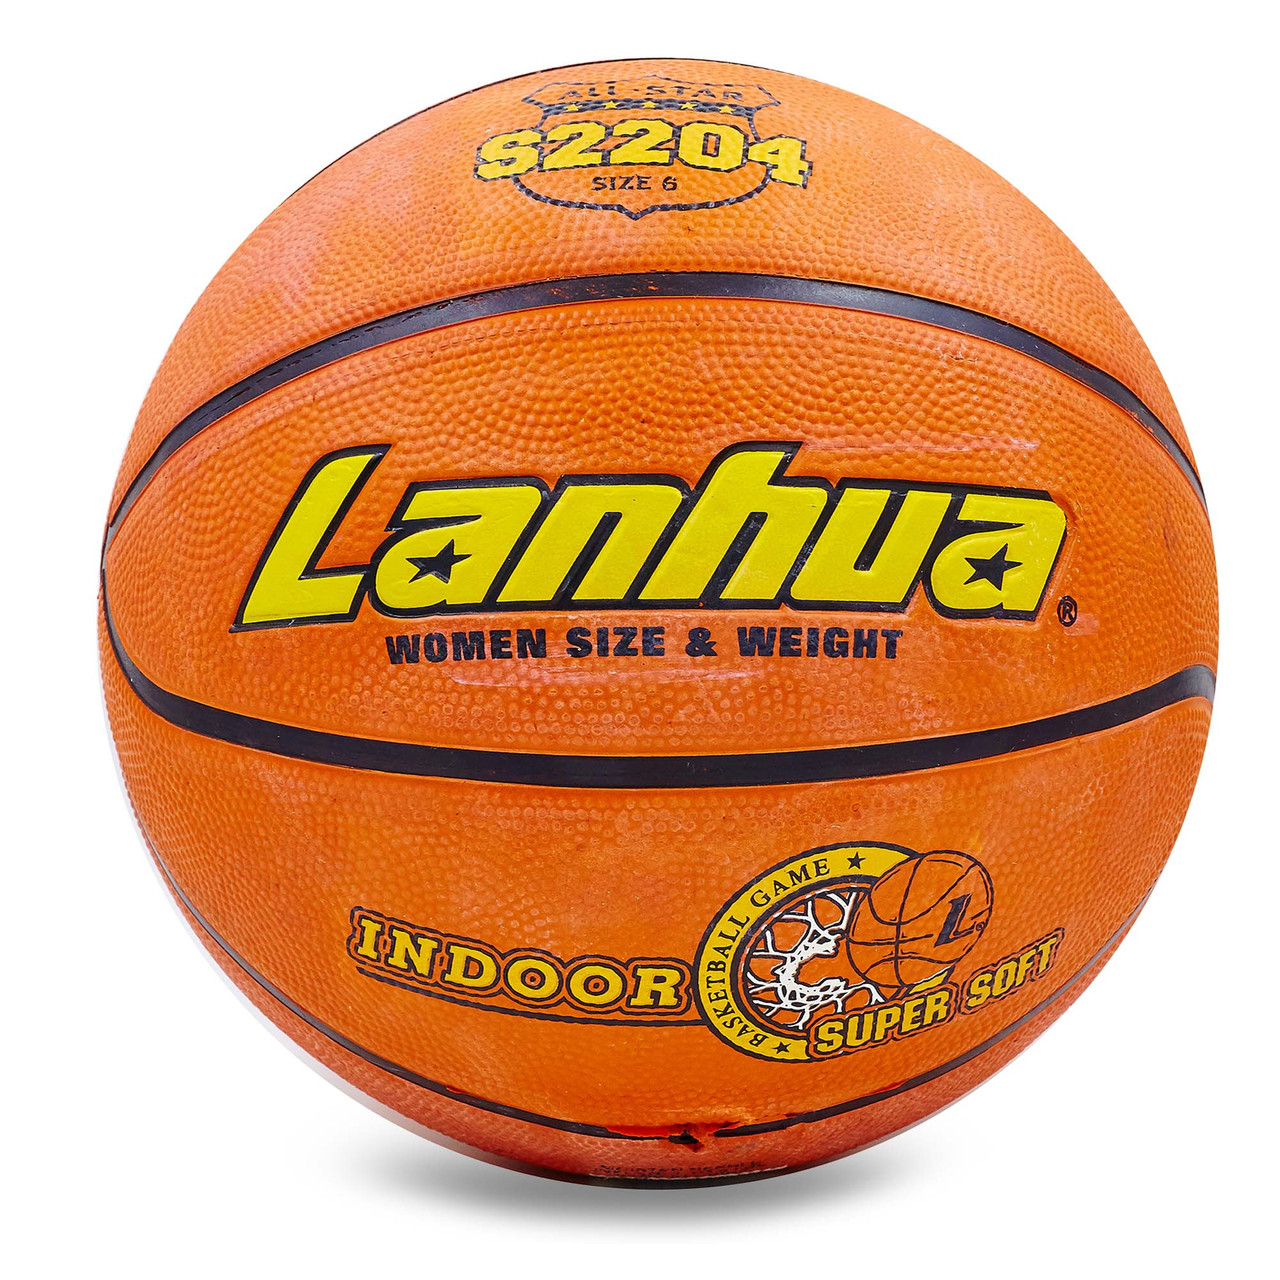 М'яч для баскетболу розмір 6 гумовий Super soft Indoor LANHUA S2204